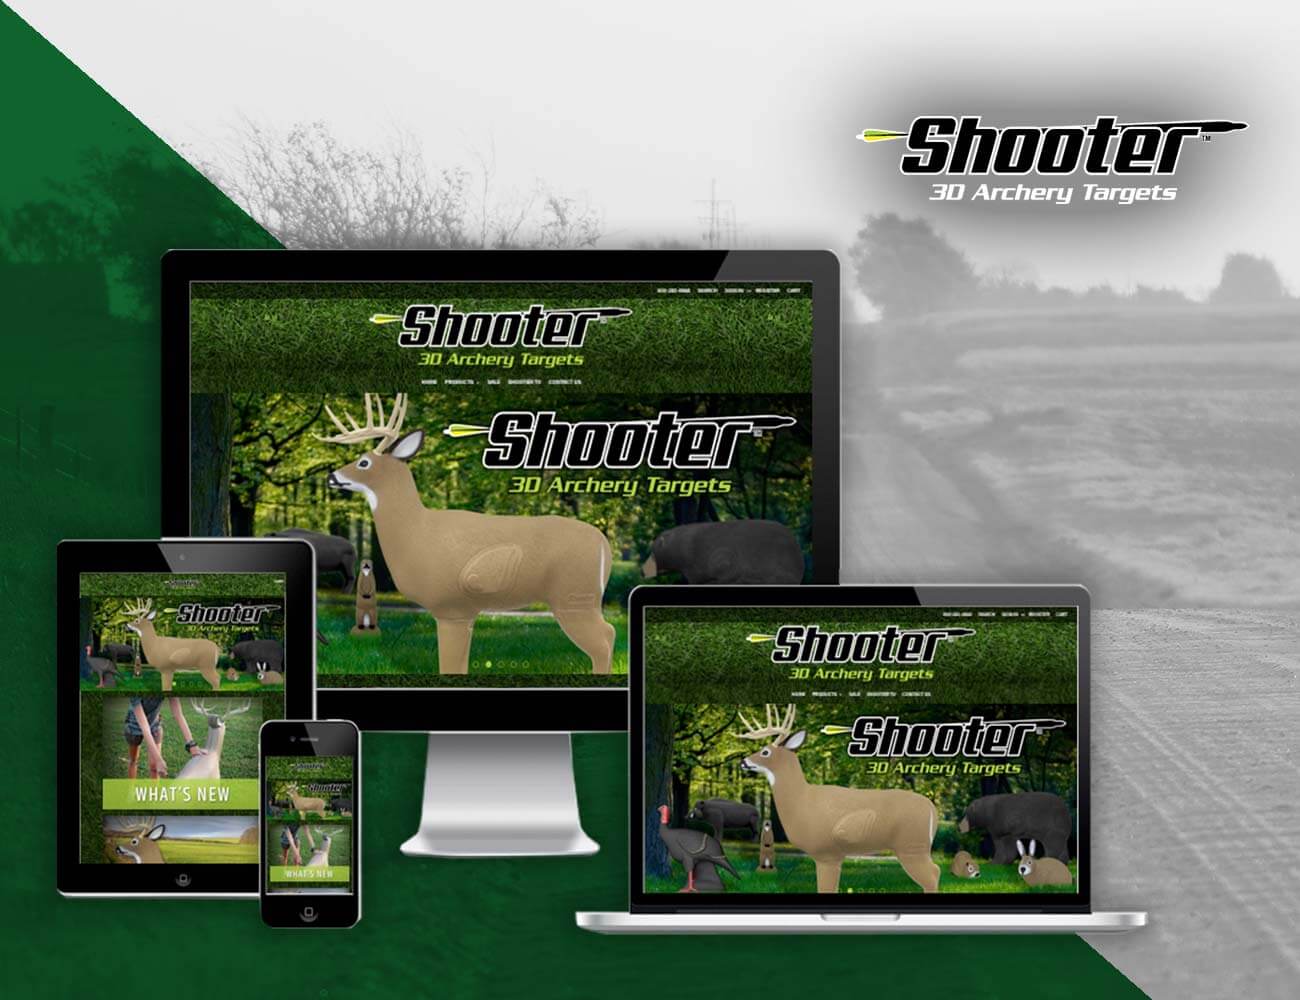 Shooter buck website design and marketing